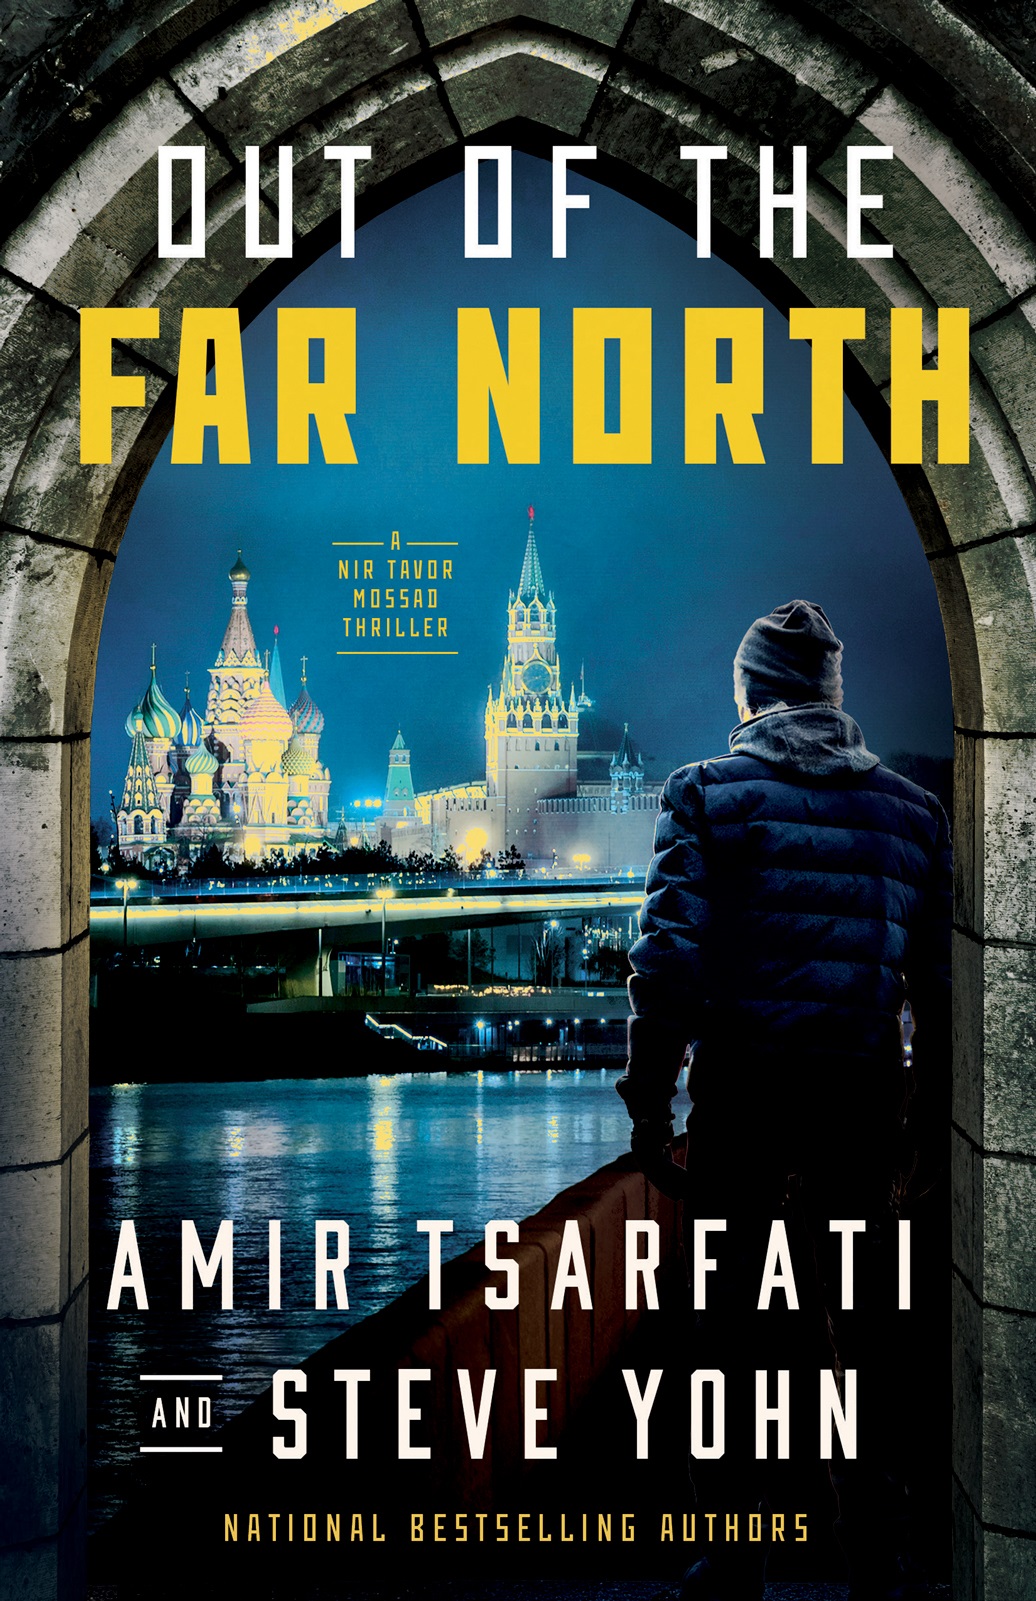 Out of the Far North by Amir Tsarfati and Steve Yohn